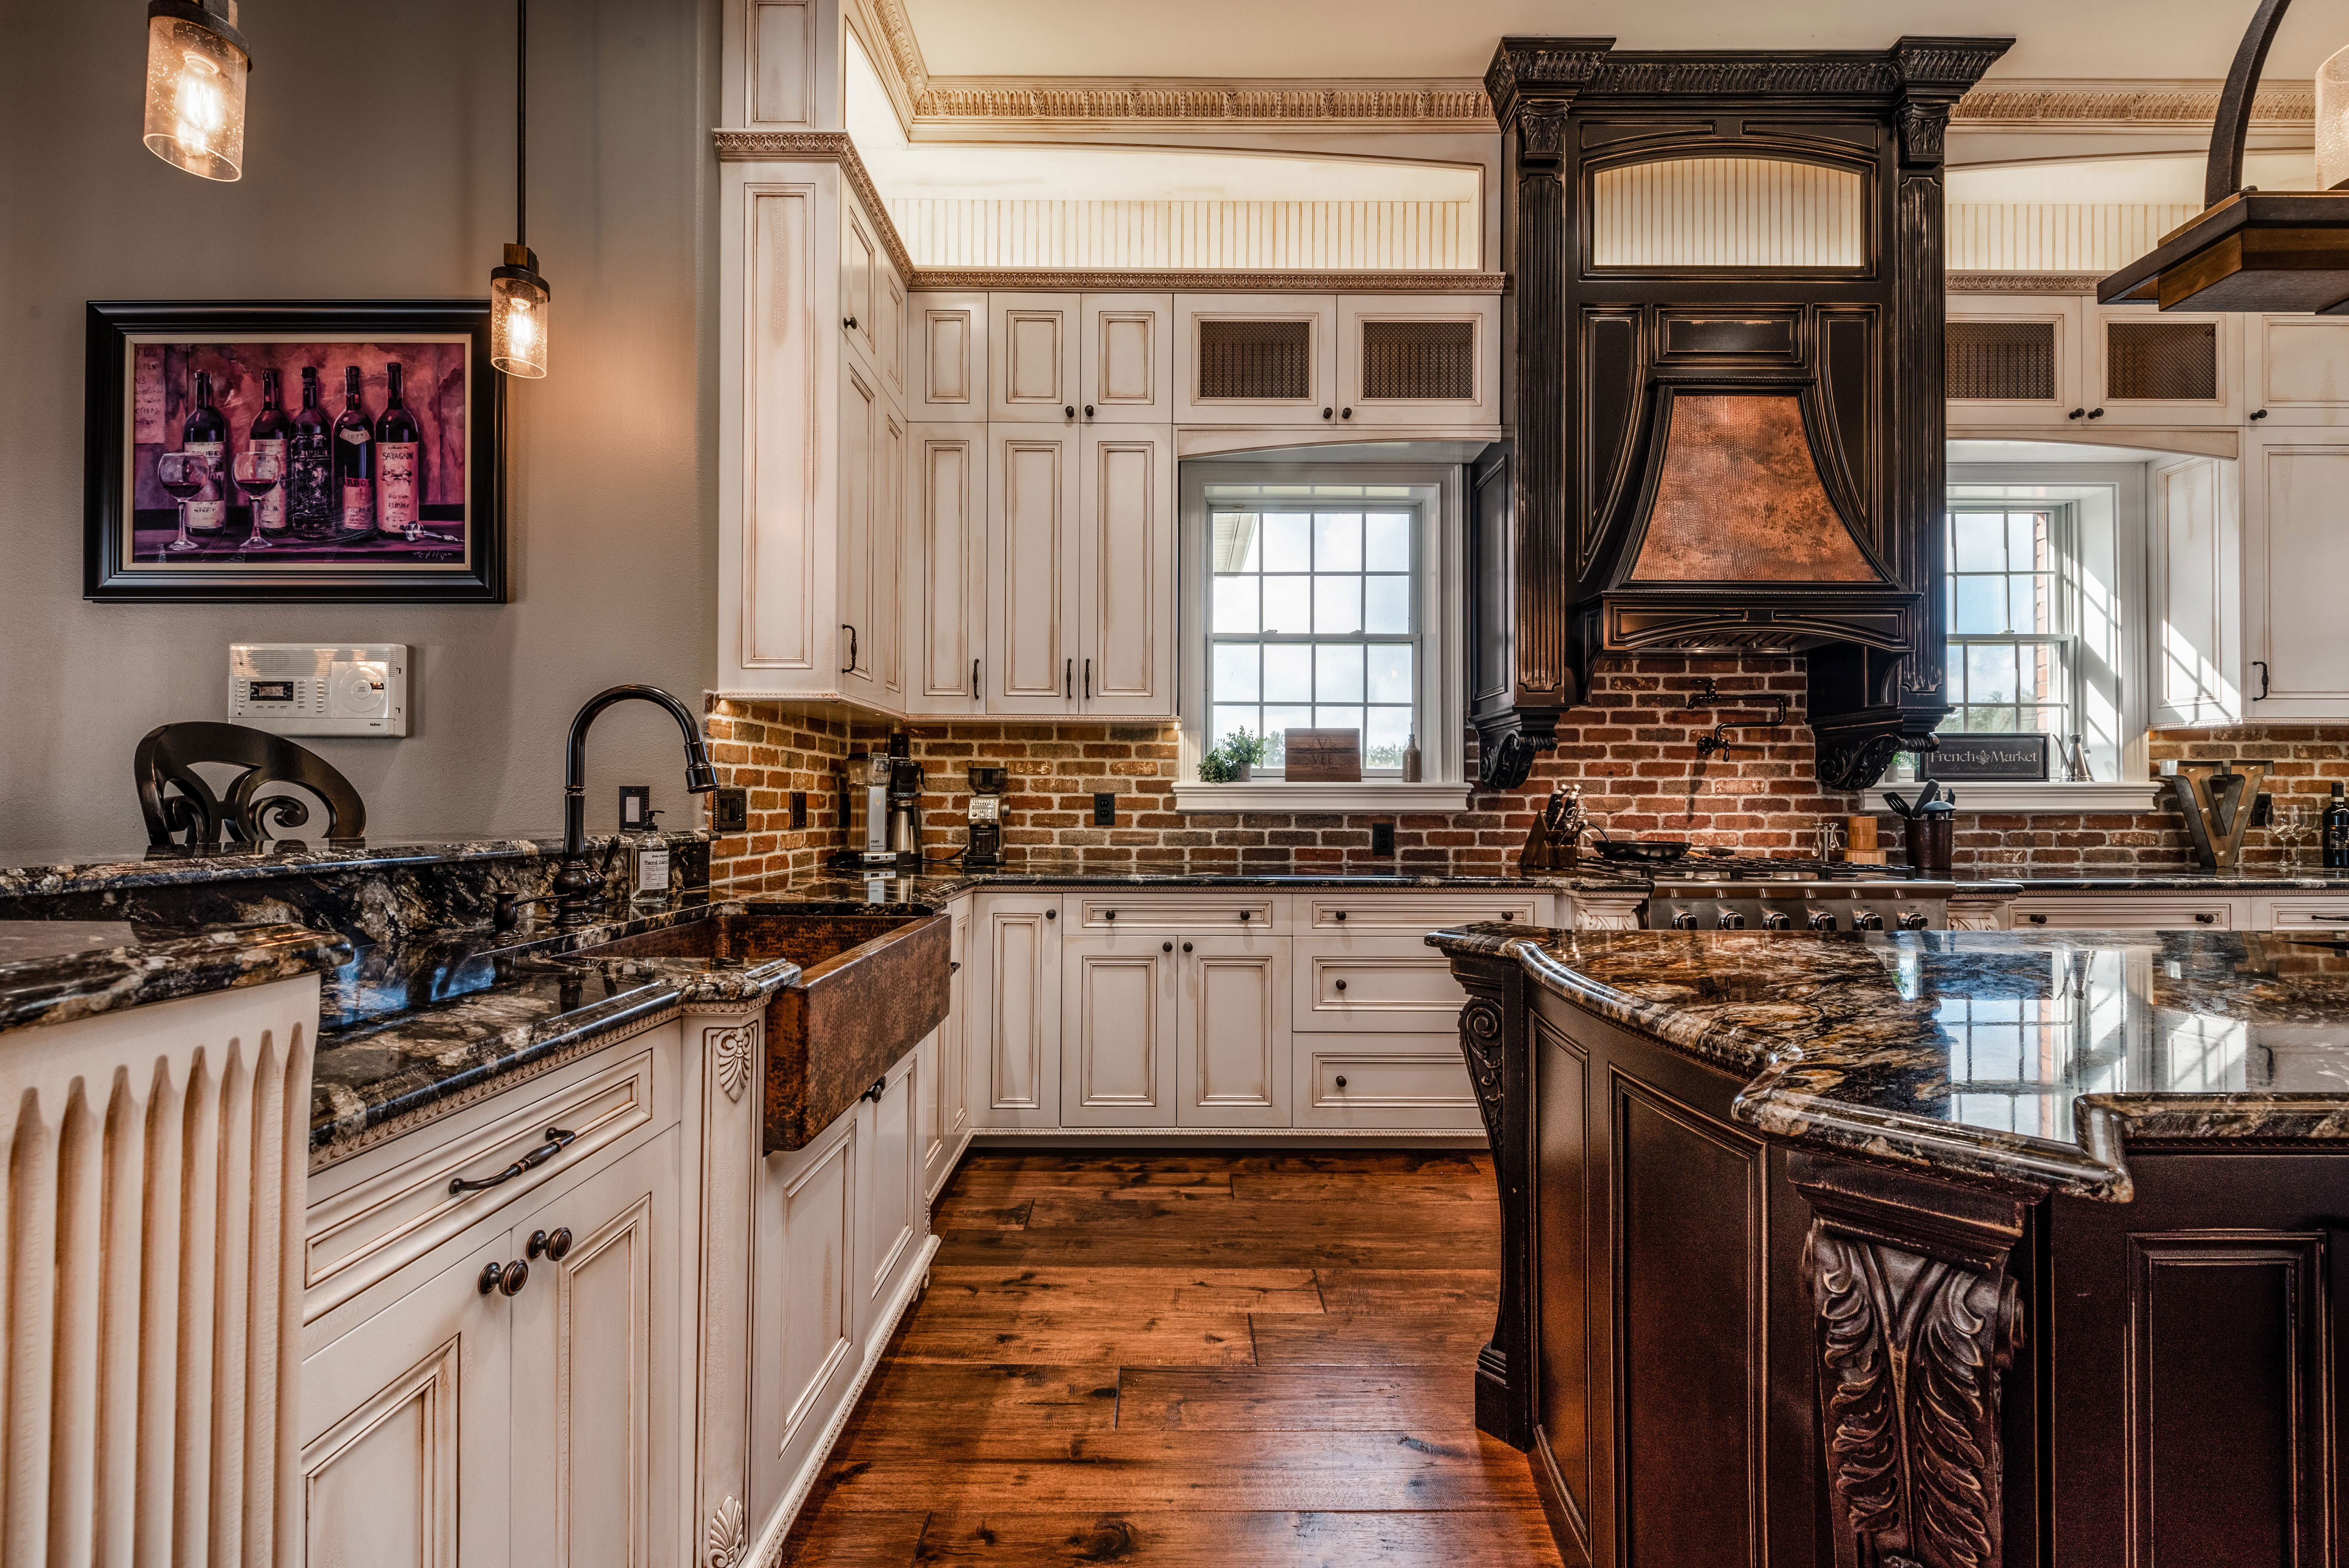 Country kitchen design features grey kitchen cabinets, marble kitchen countertops and brick backsplash